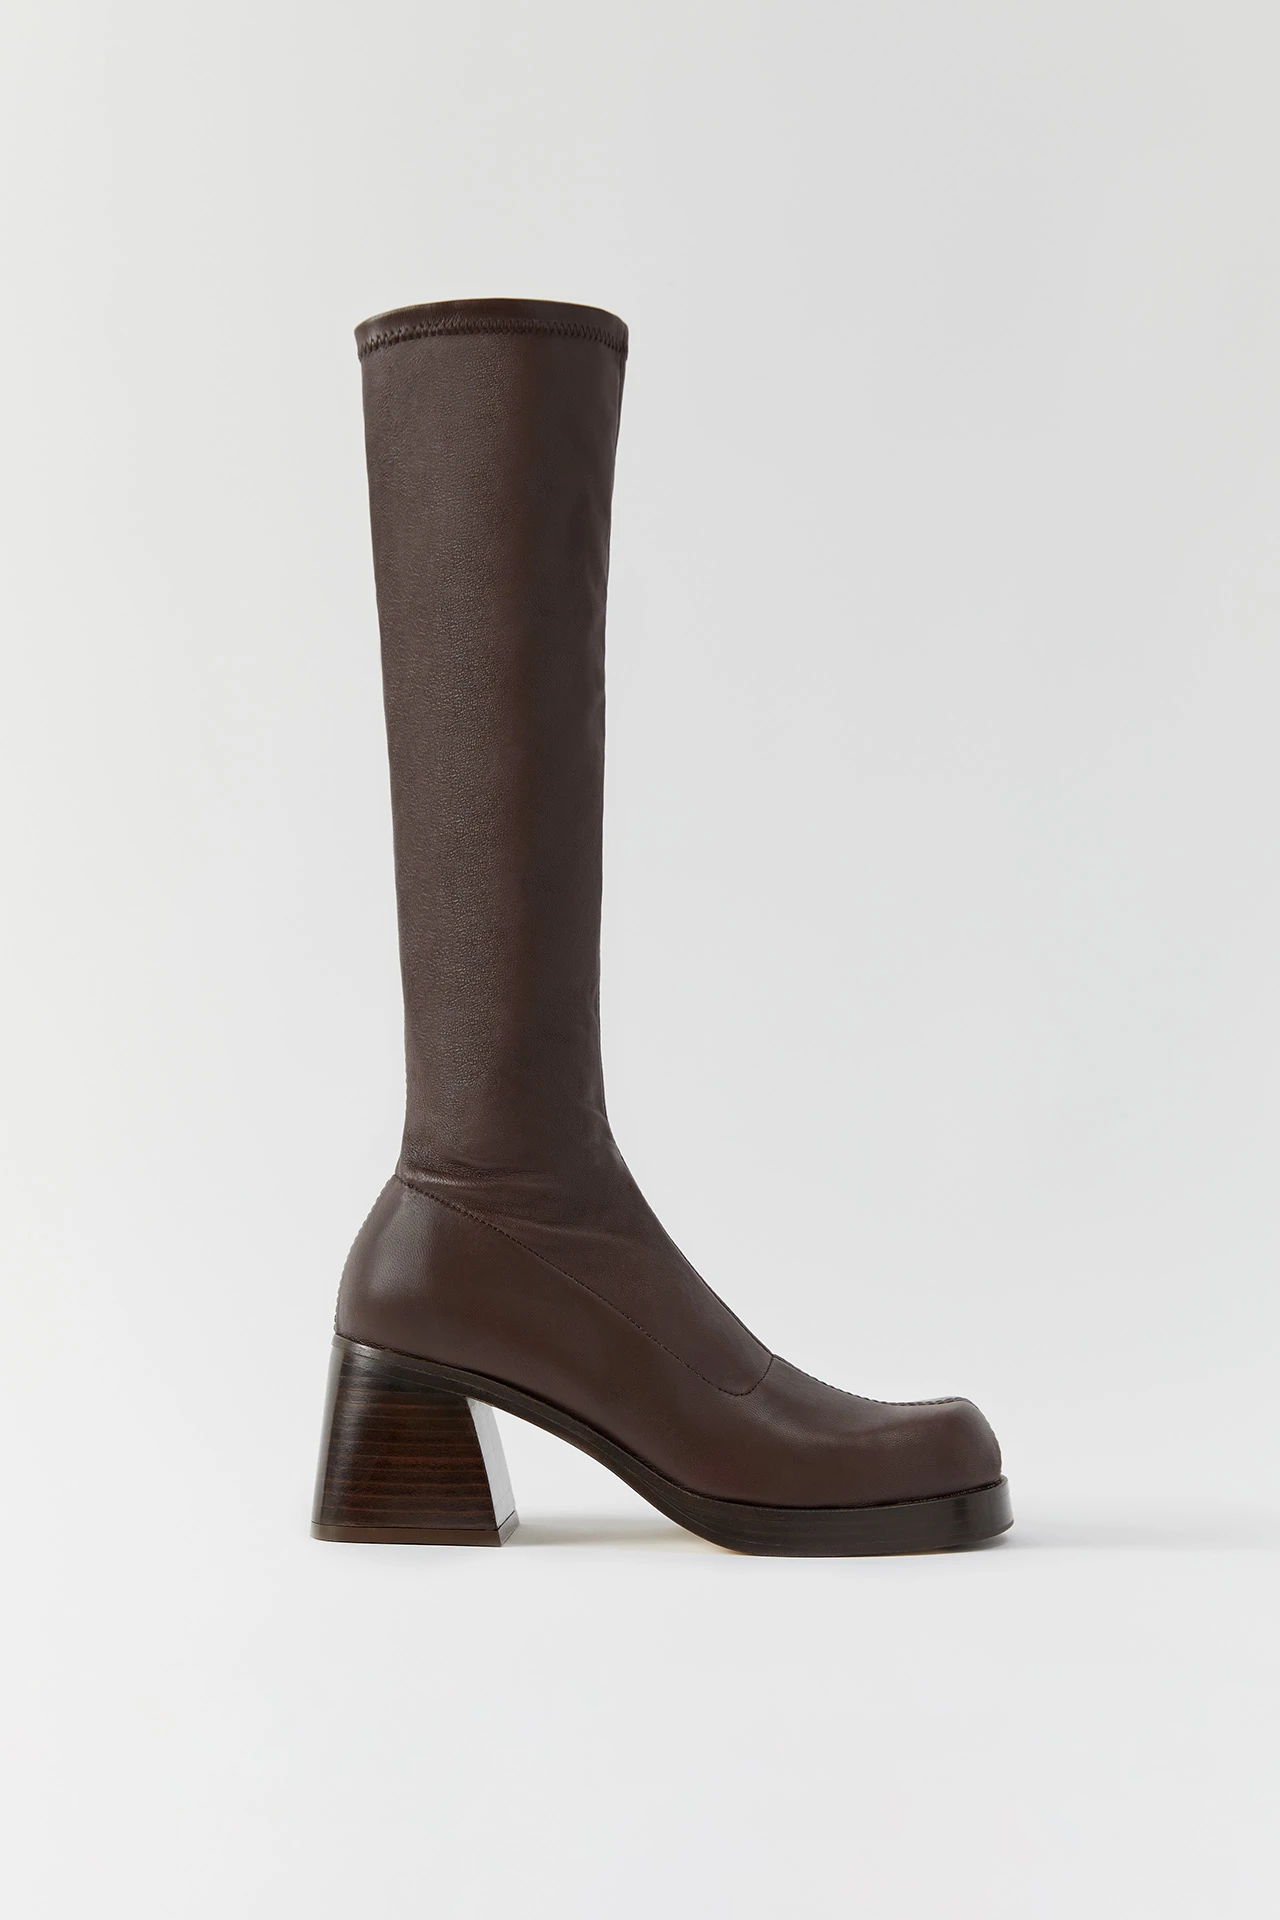 miista-hedy-brown-tall-boots-1